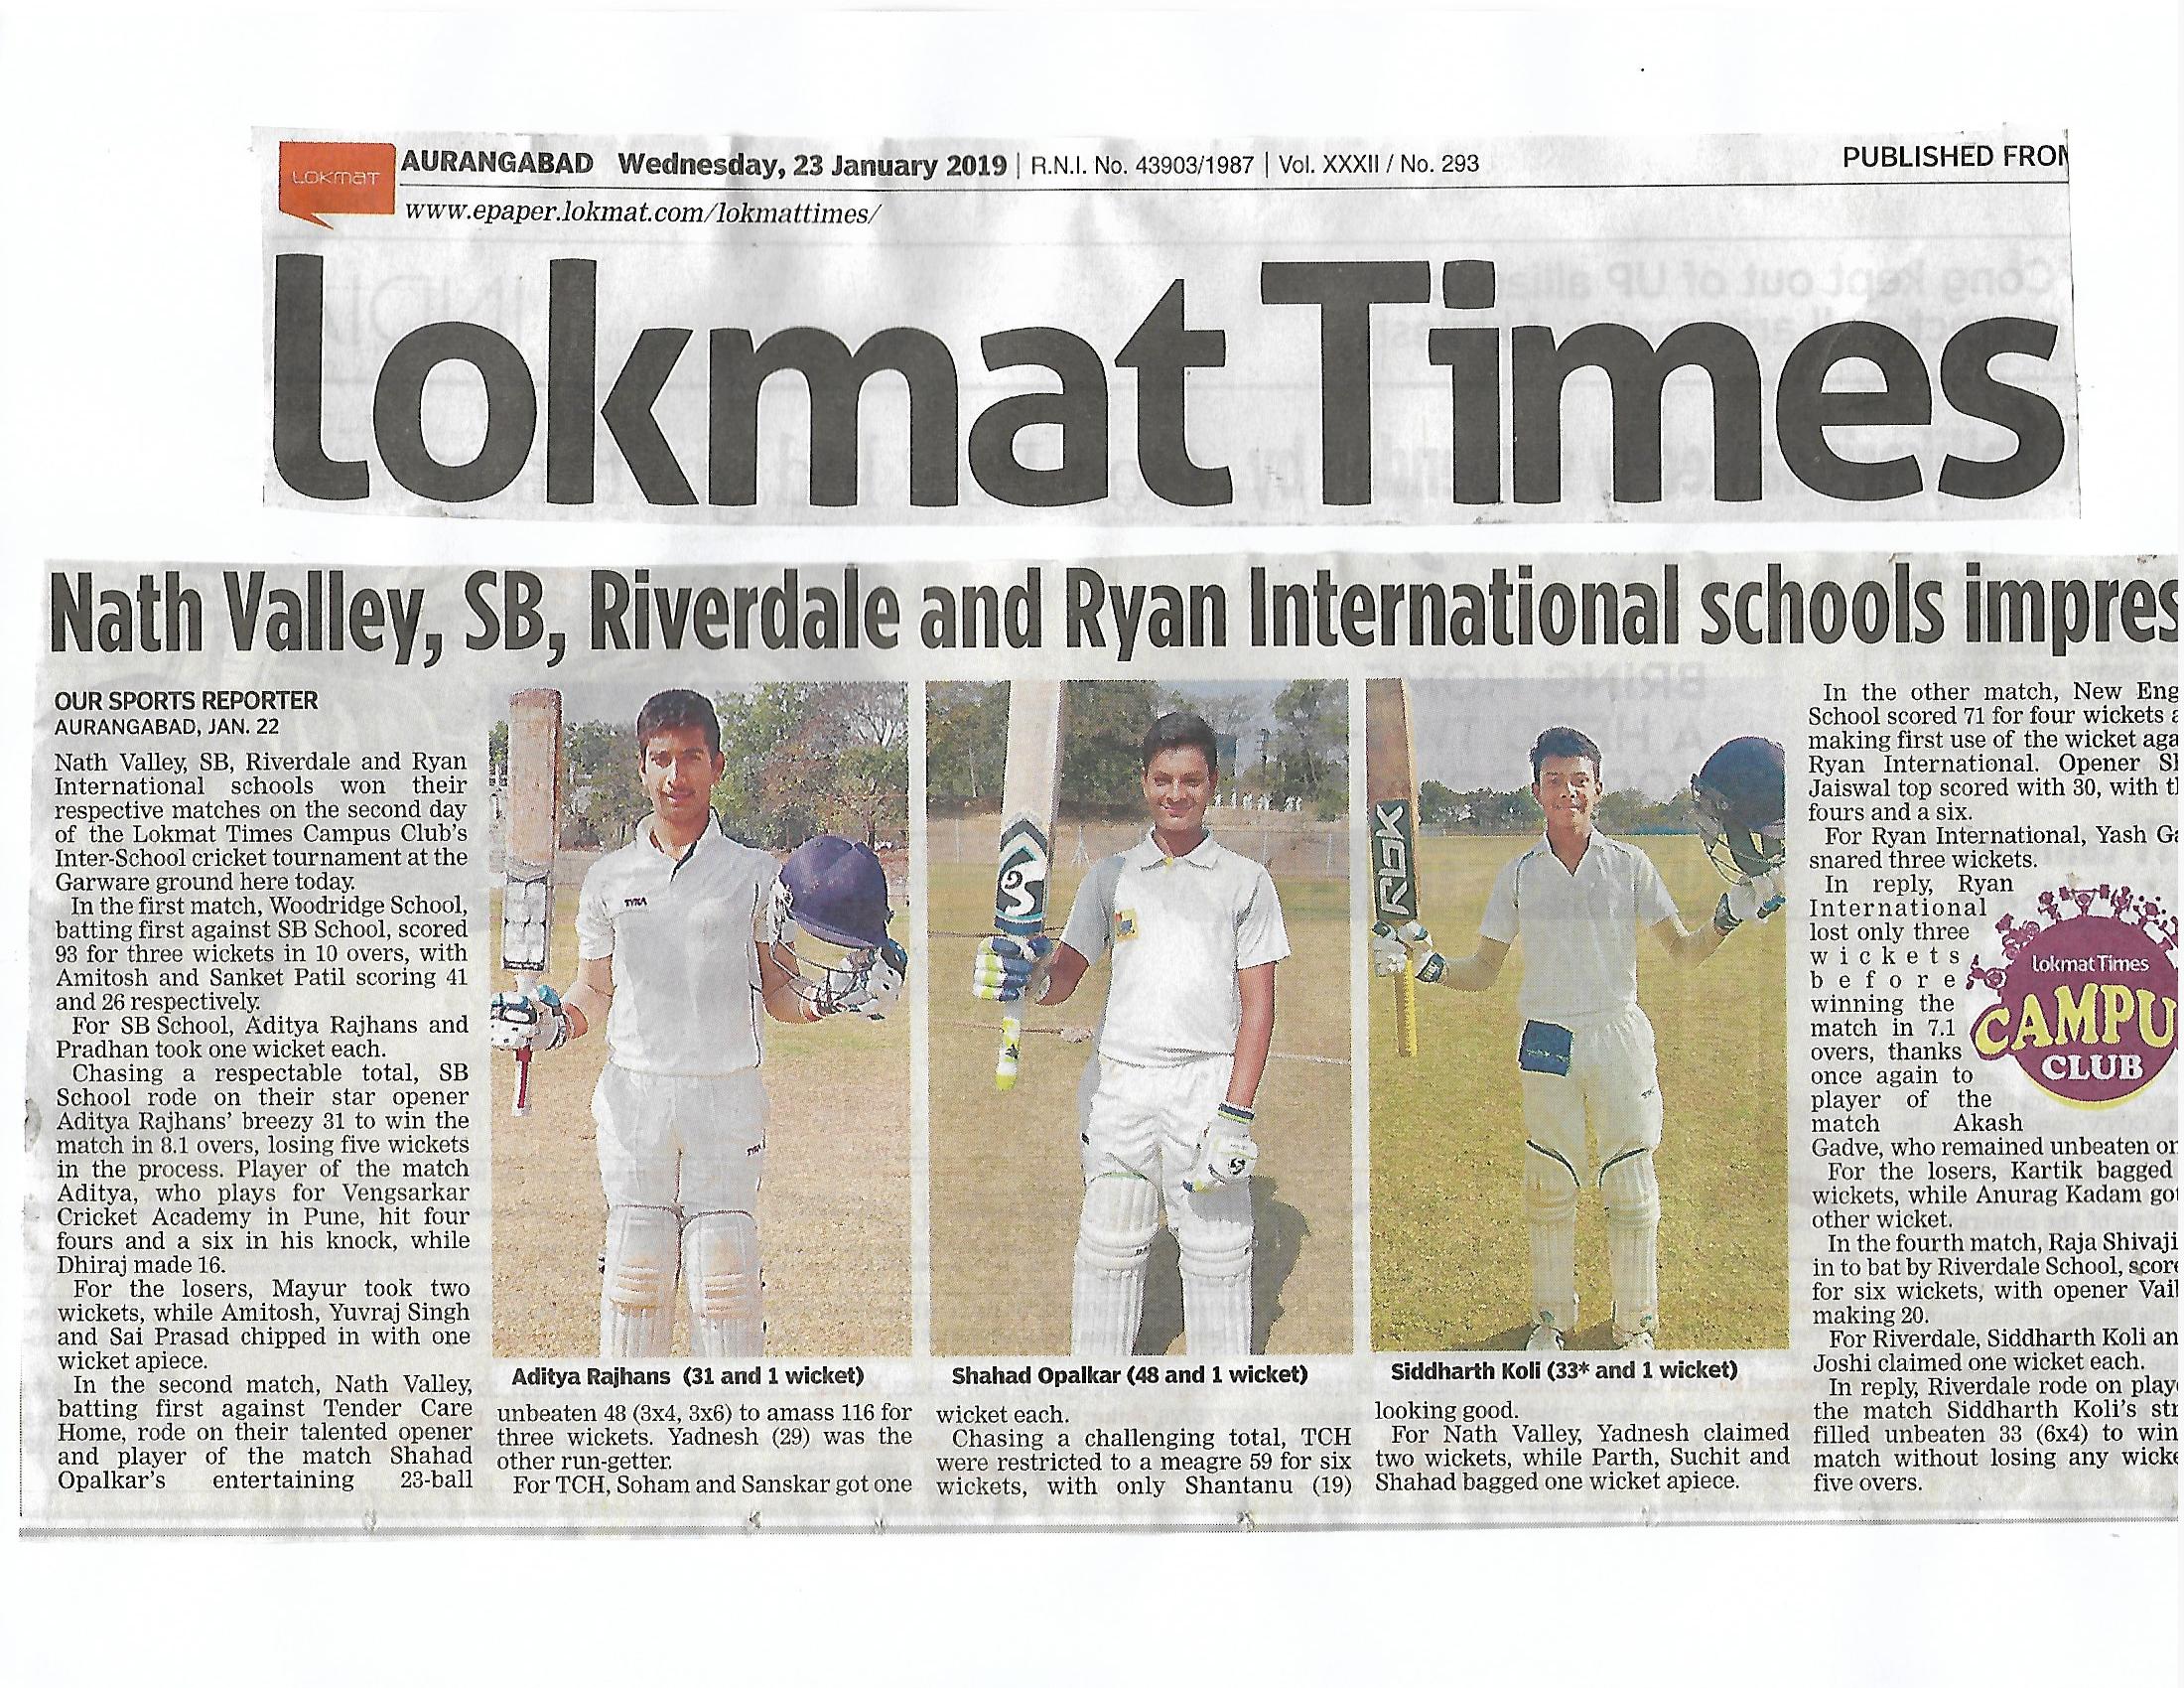 Lokmat campus club inter school Cricket tournament’ - Ryan International School, Aurangabad